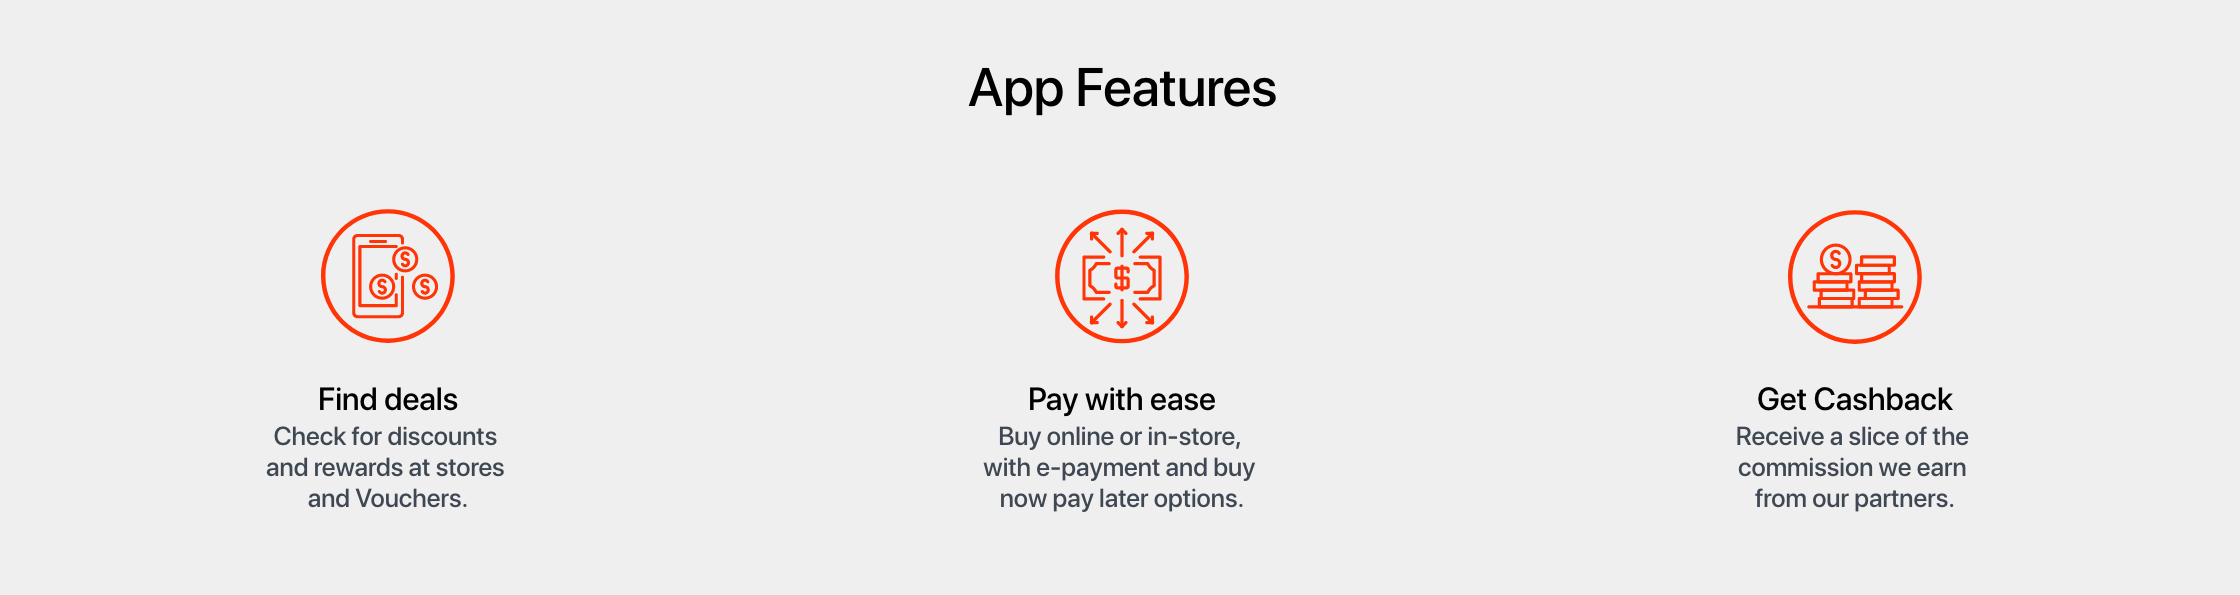 App features